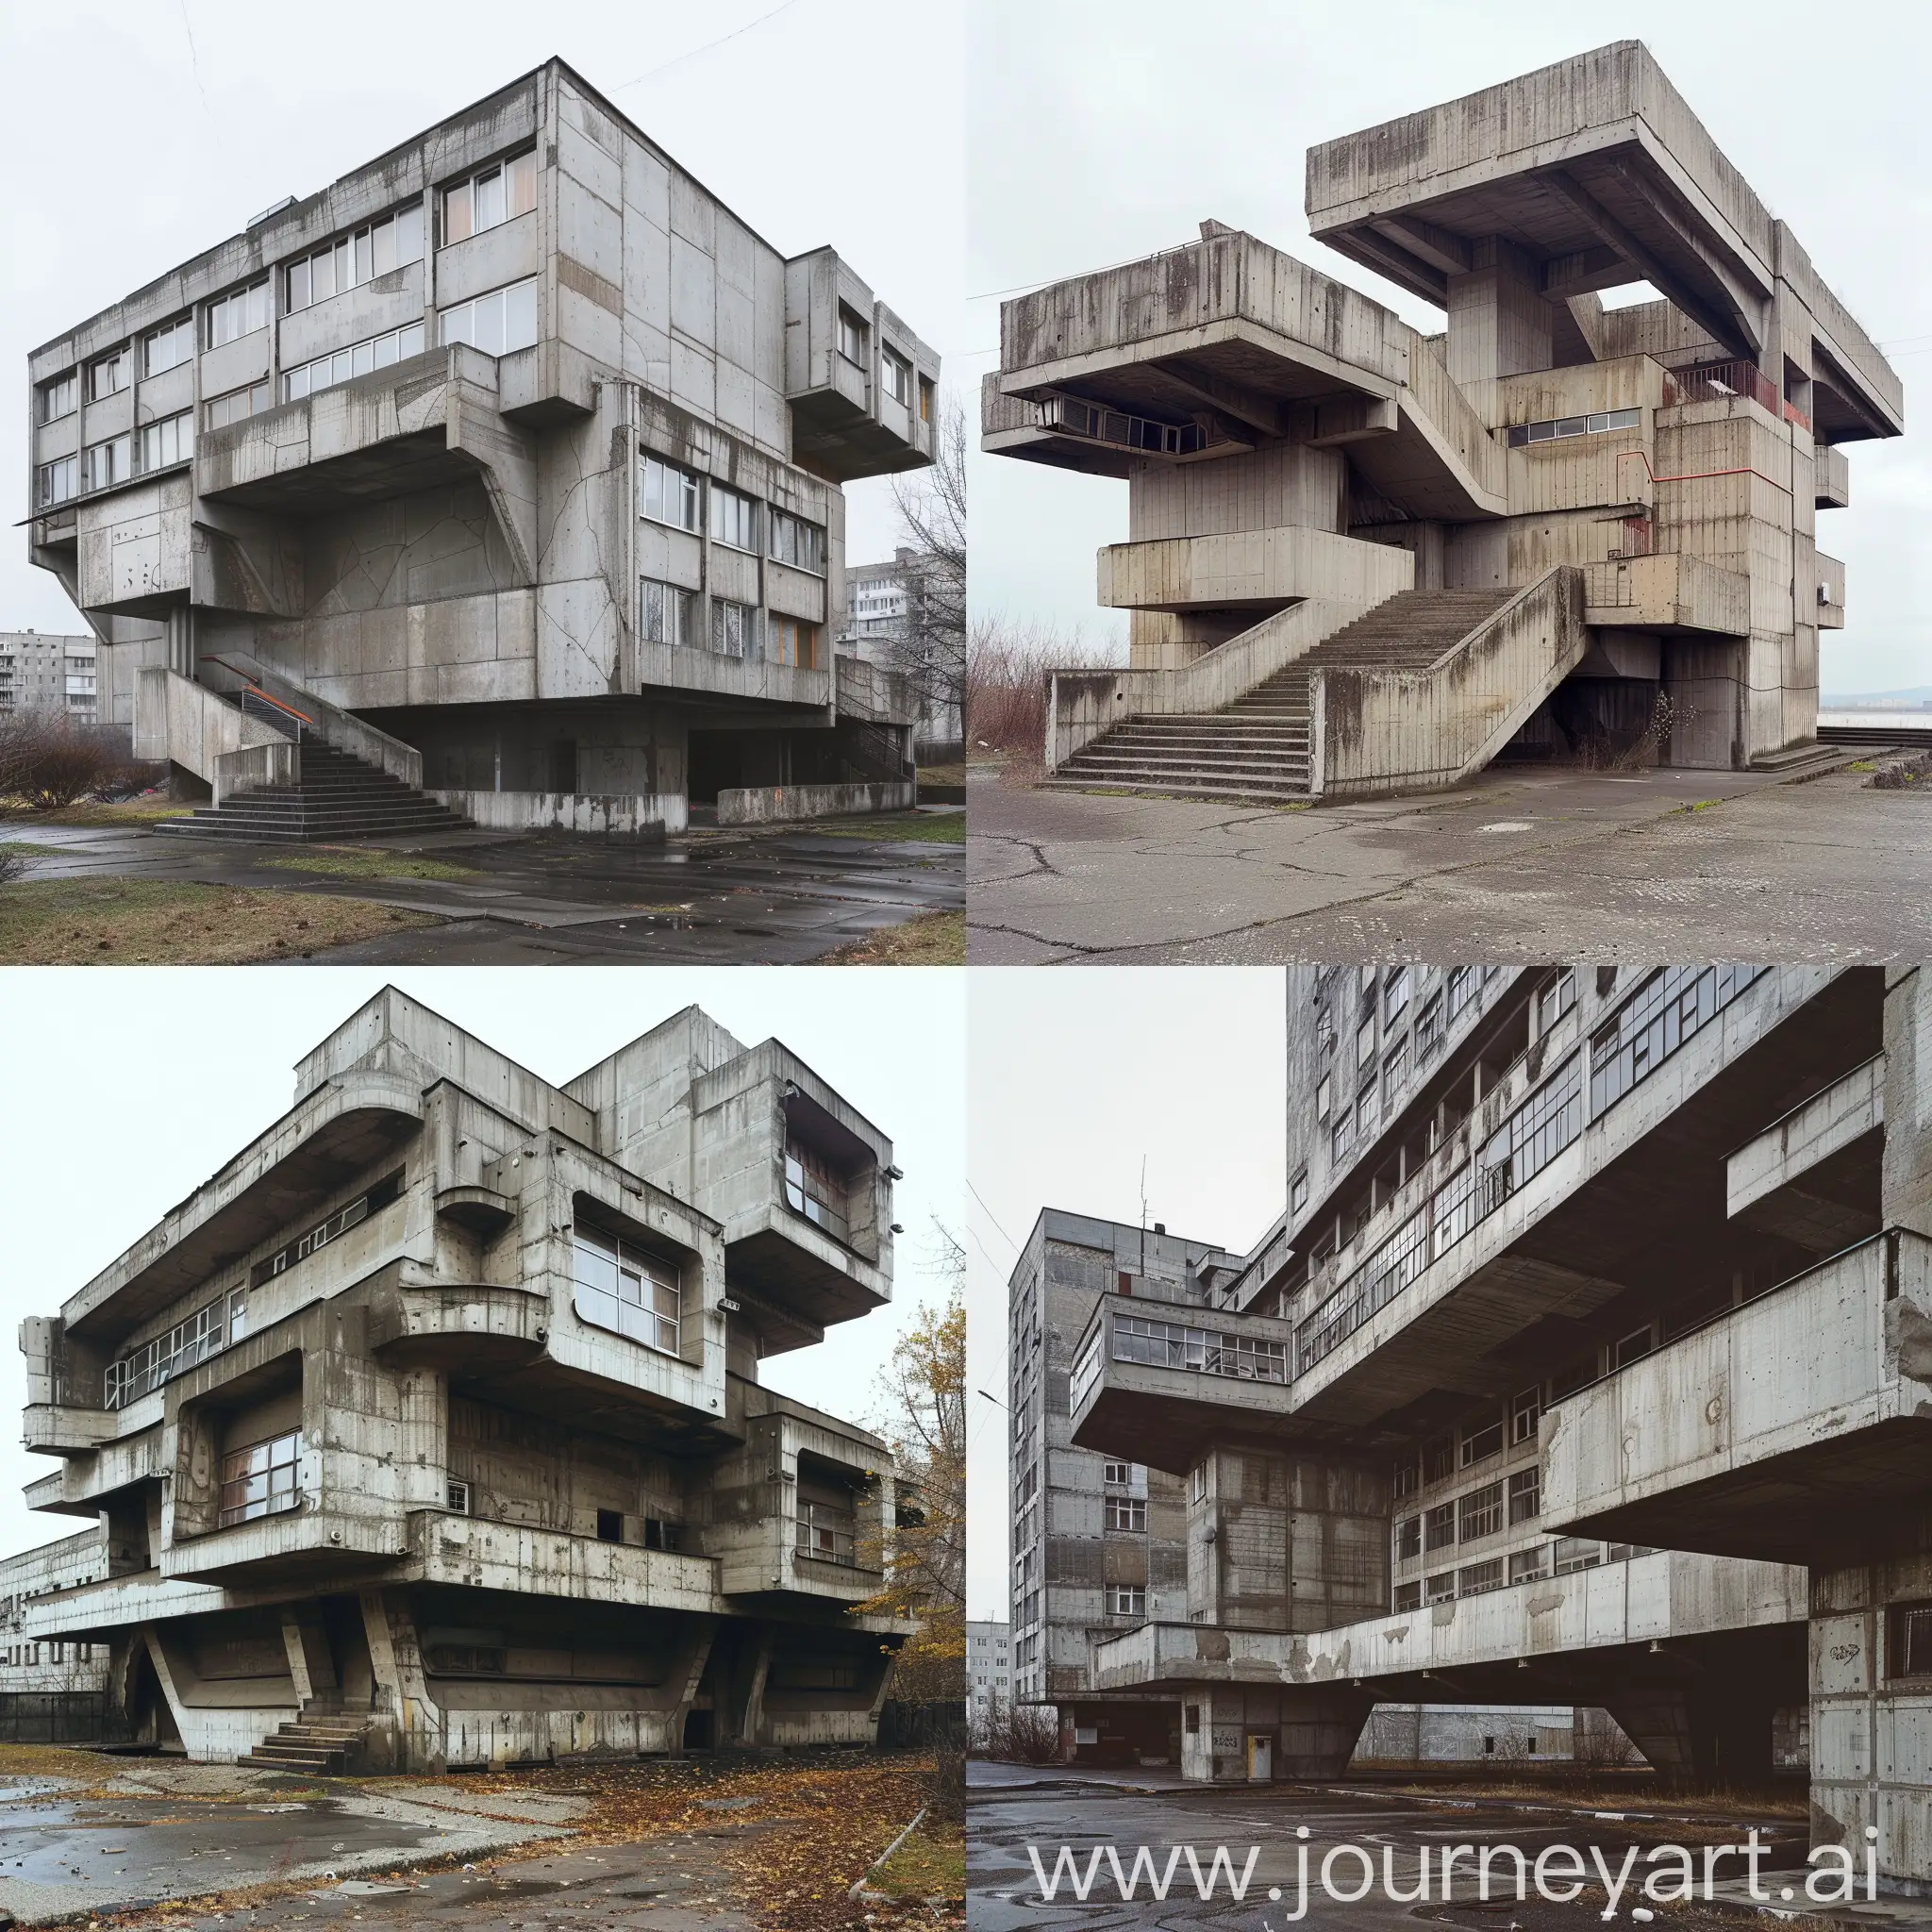 Soviet-Concrete-Building-Urban-Architecture-in-Vignette